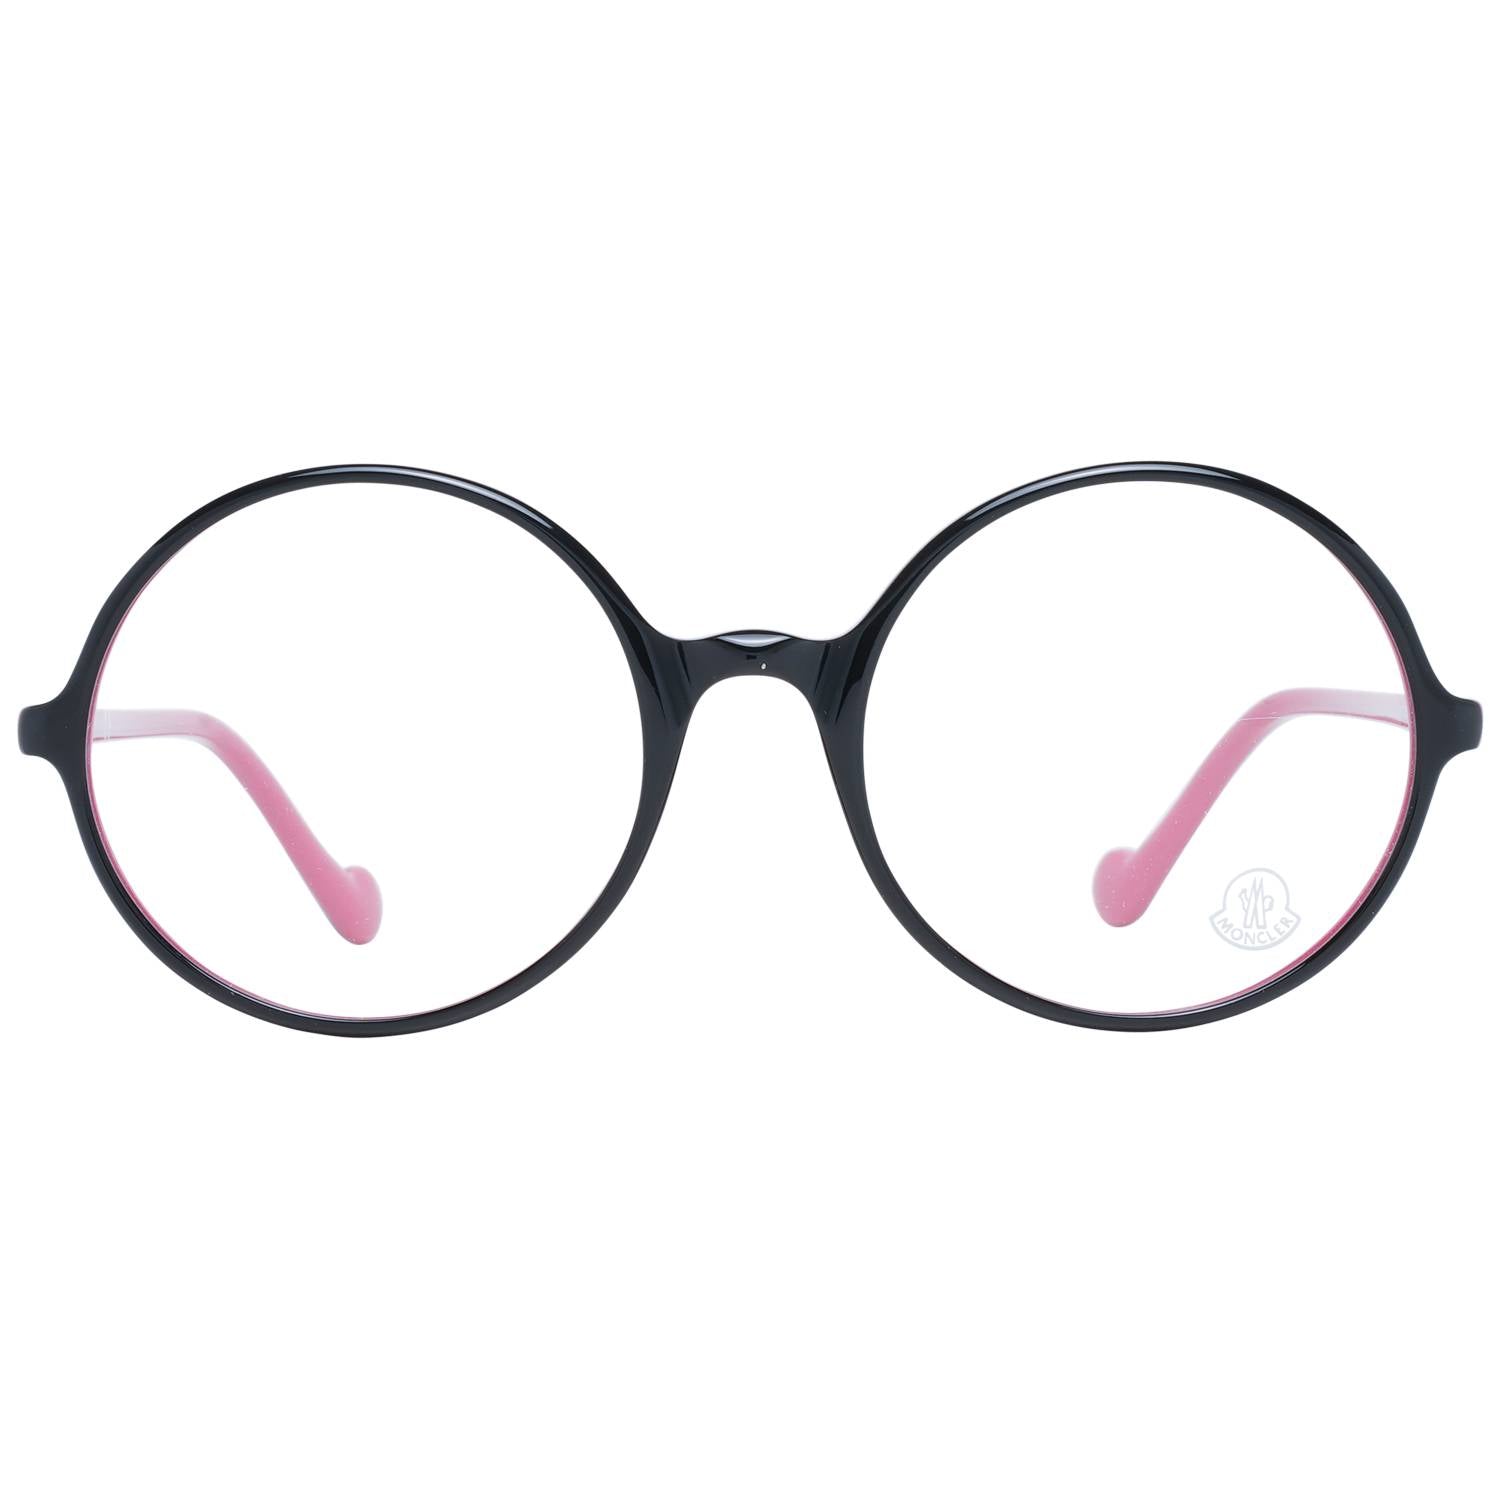 Moncler Eyeglasses Moncler Glasses Frames ML5088 05A 54mm Eyeglasses Eyewear UK USA Australia 